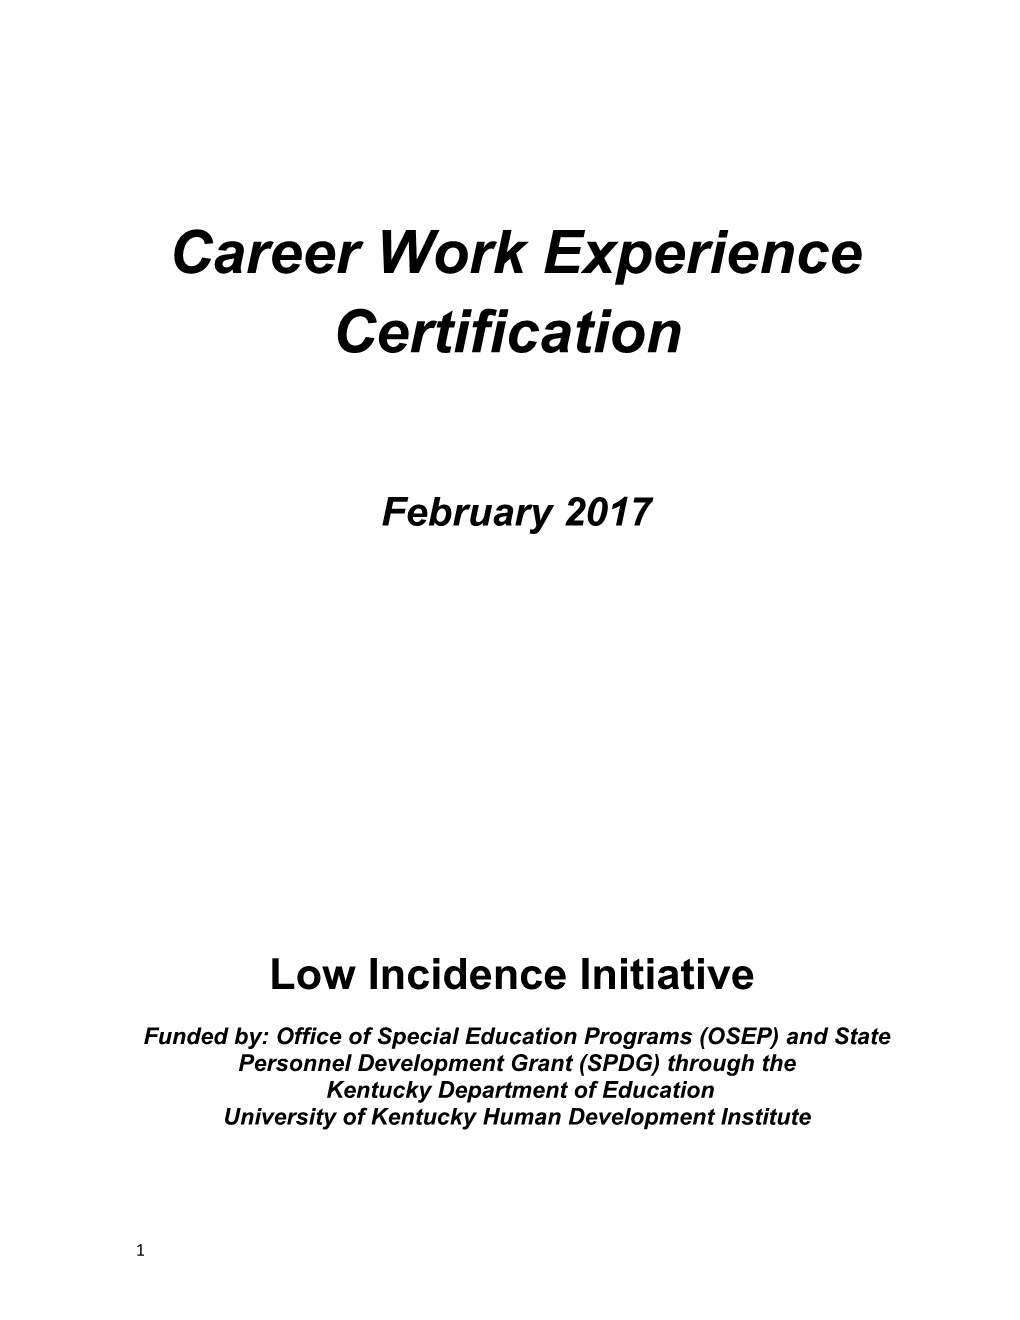 Career Work Experience Certification